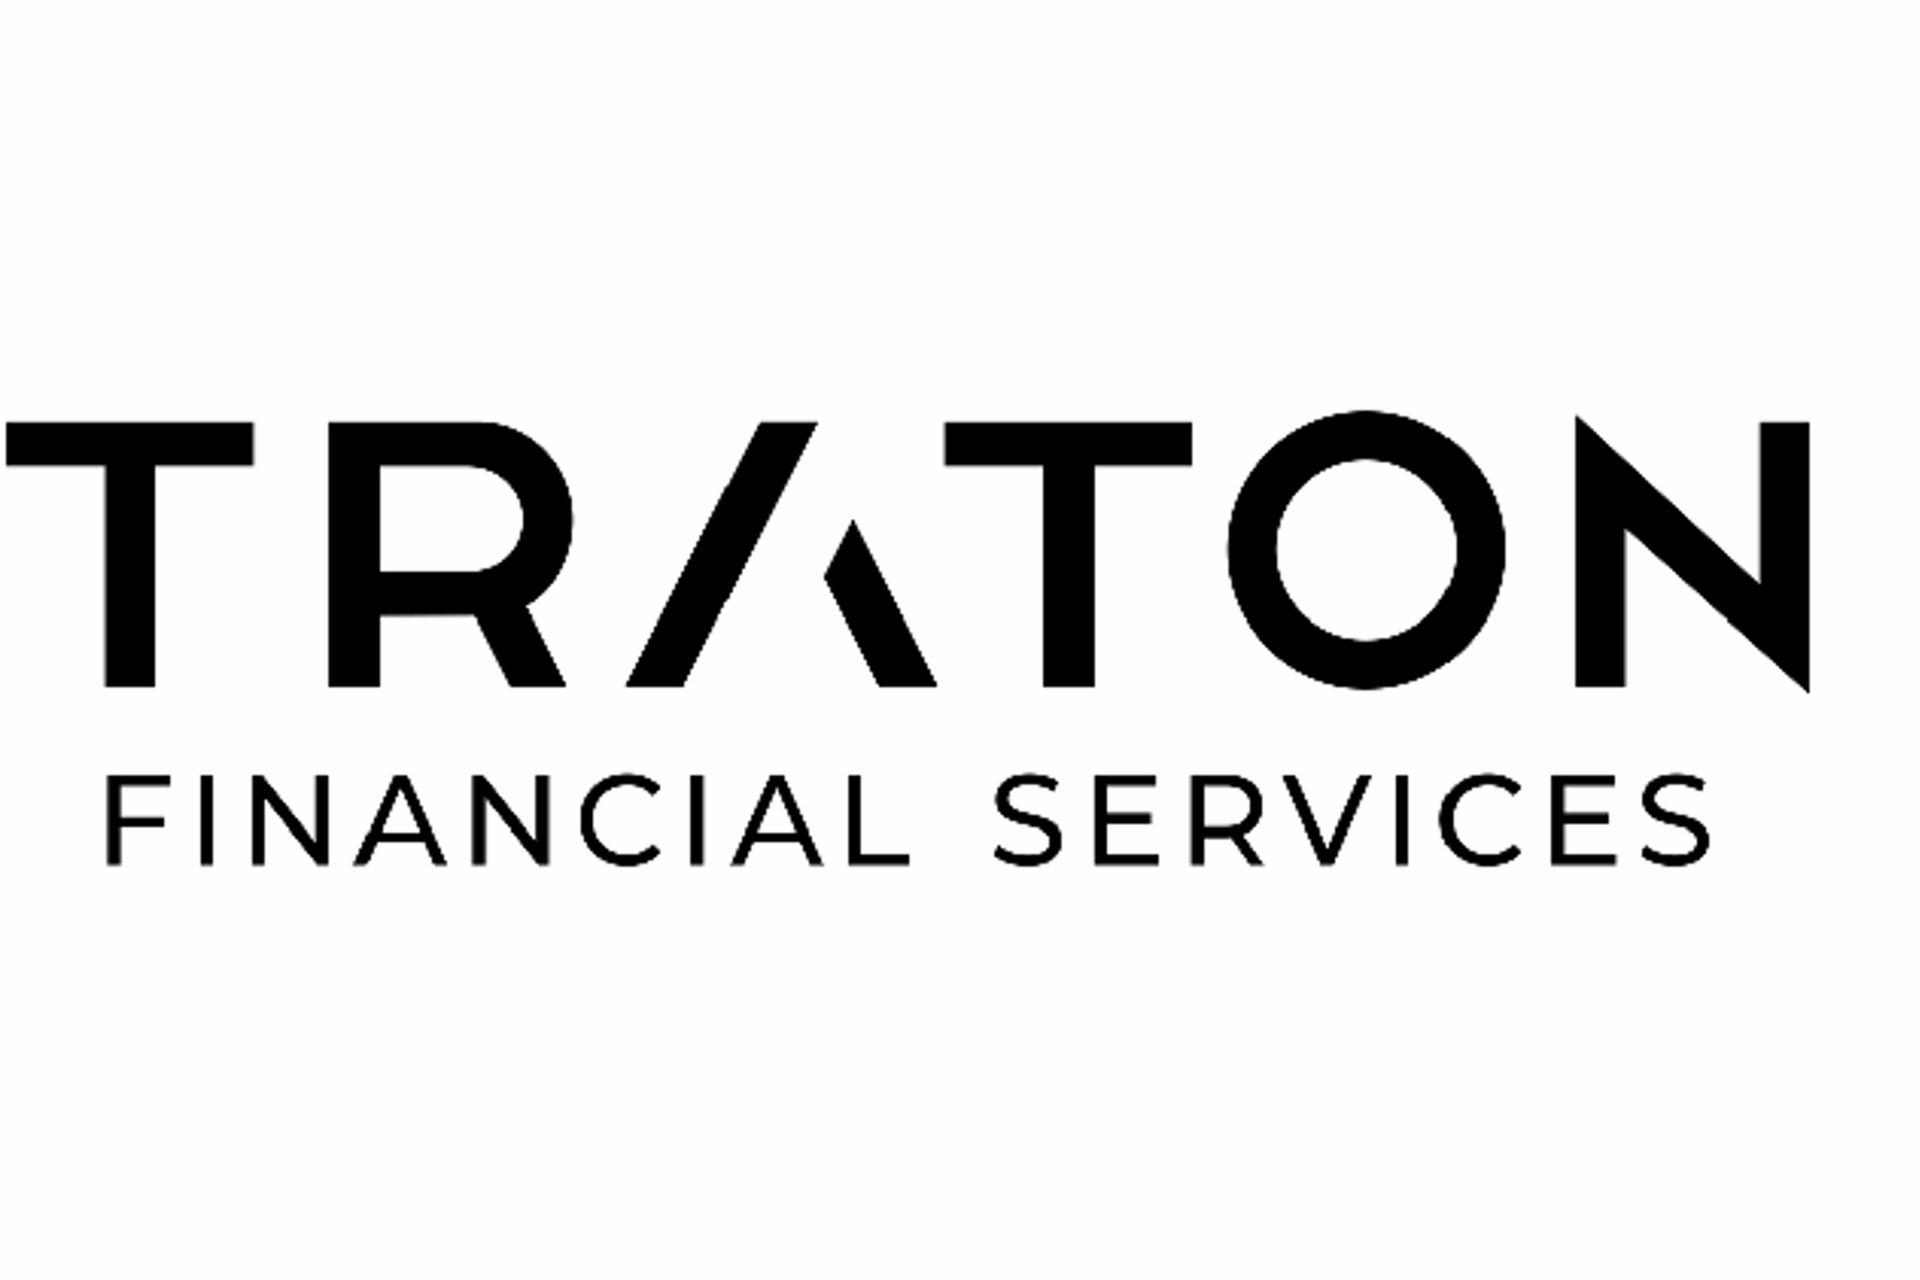 TRATON FINANCIAL SERVICES Logo in schwarz
                 